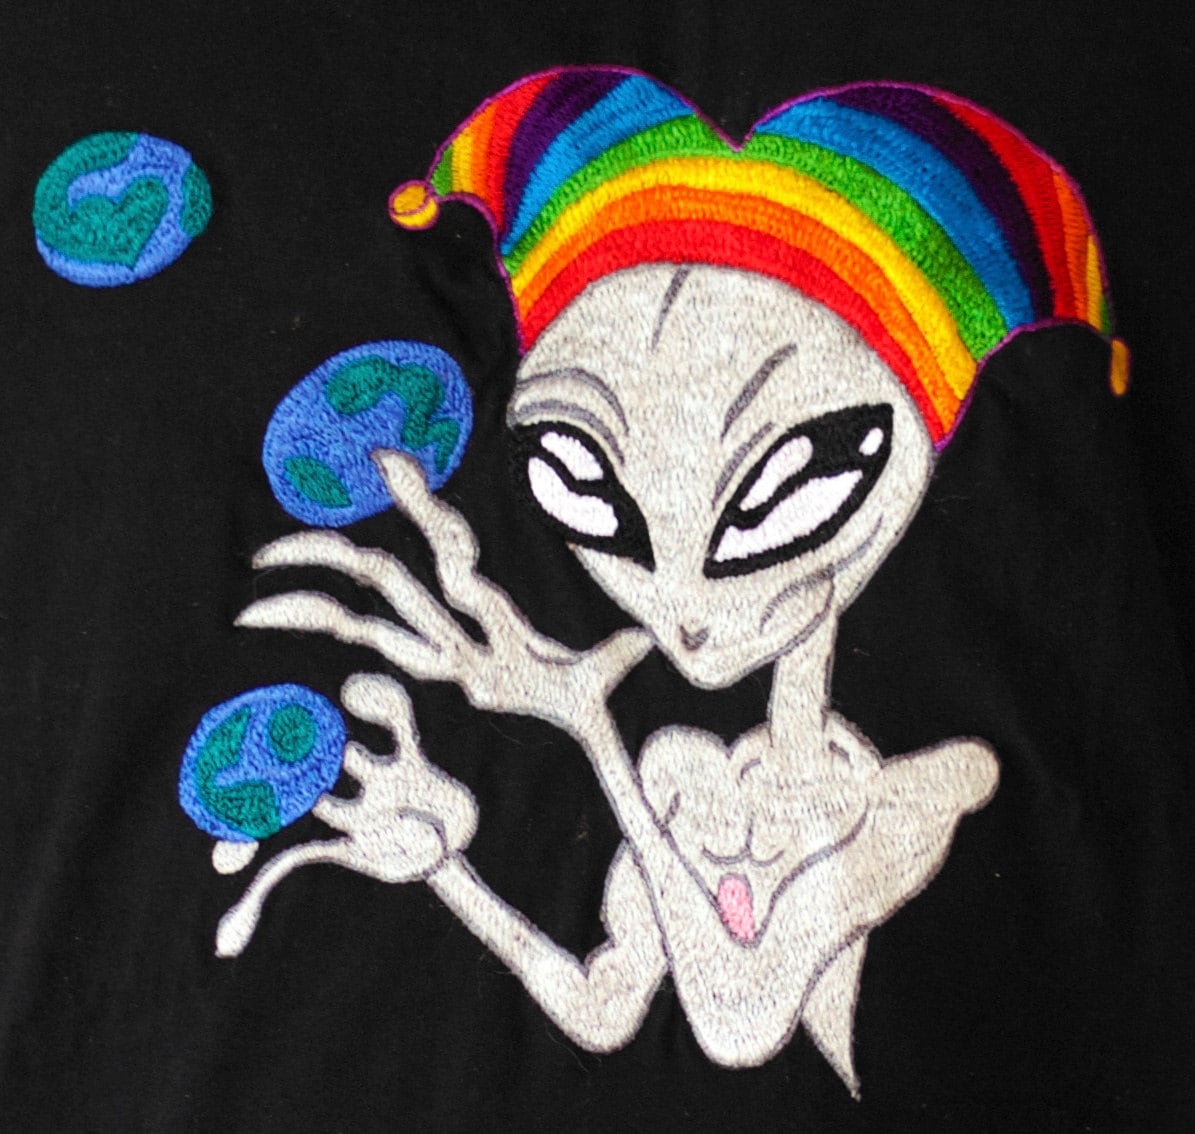 Cosmic Joker sleeveless shirt handmade embroidery no print goa alien